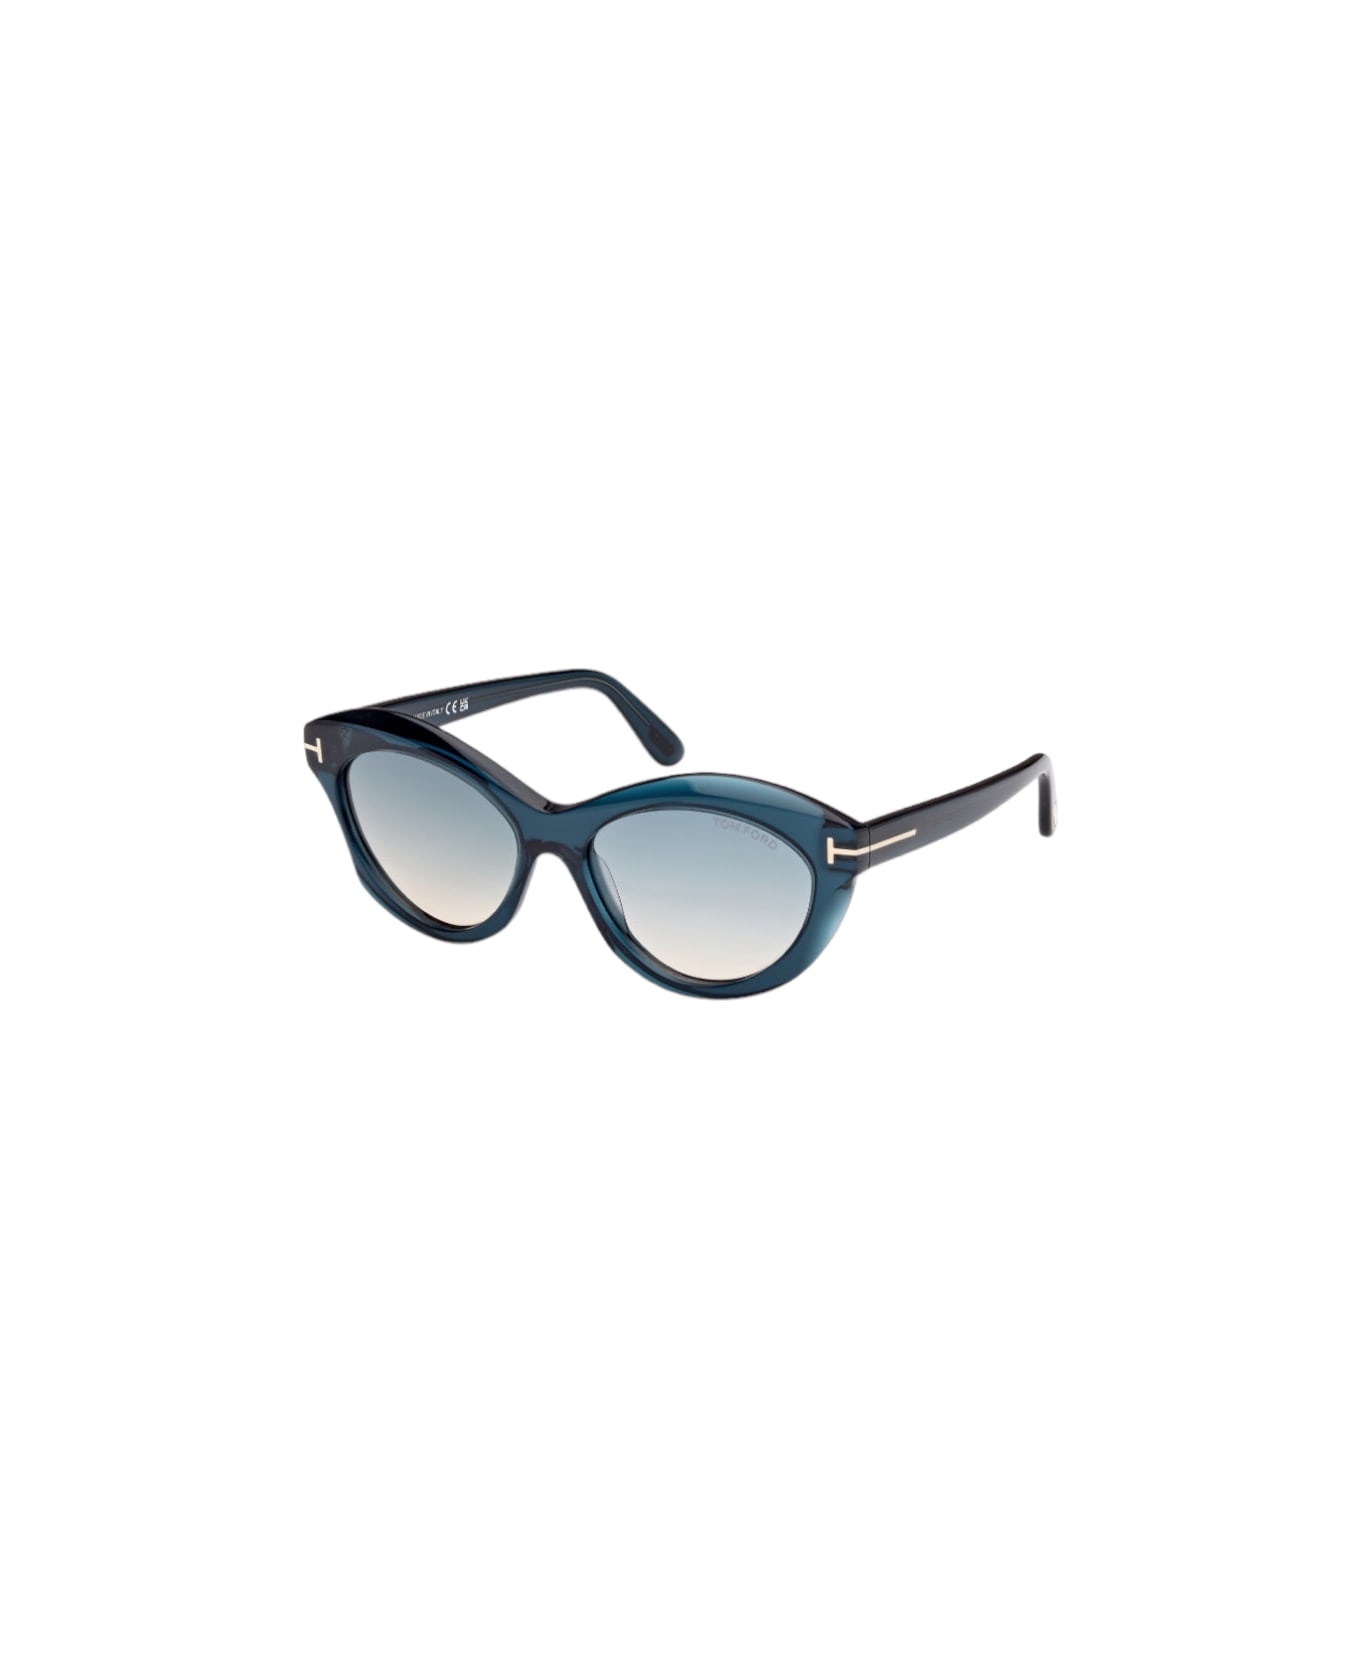 Tom Ford Eyewear Toni - Tf 1111 /s Sunglasses